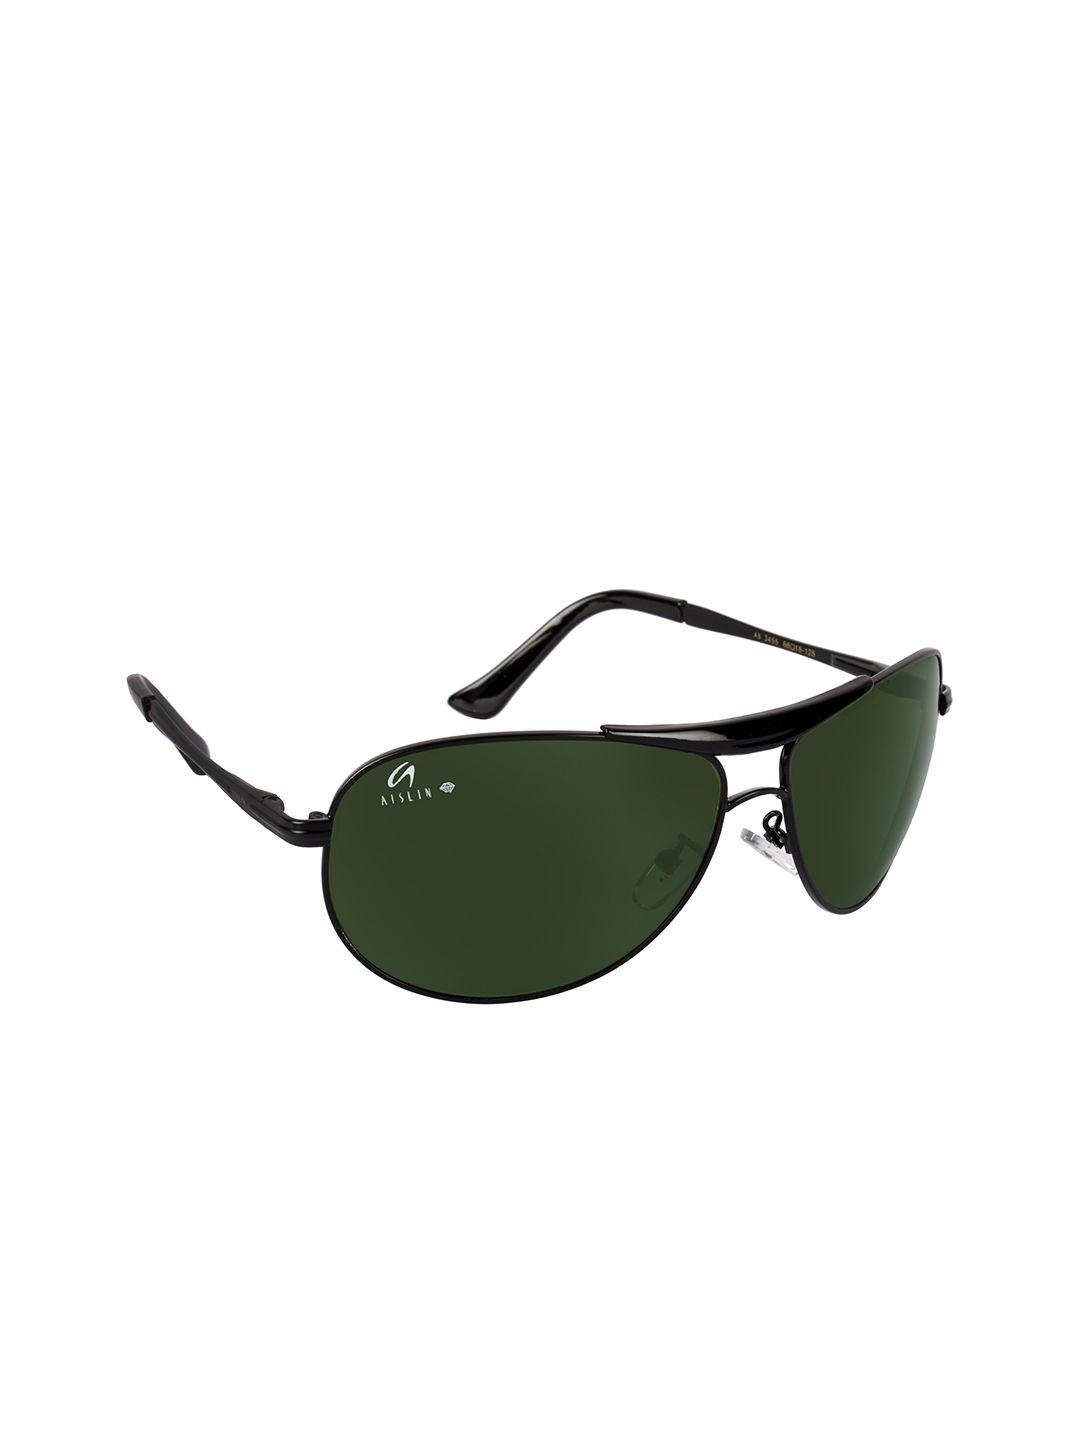 aislin men black toughened glass aviator sunglasses